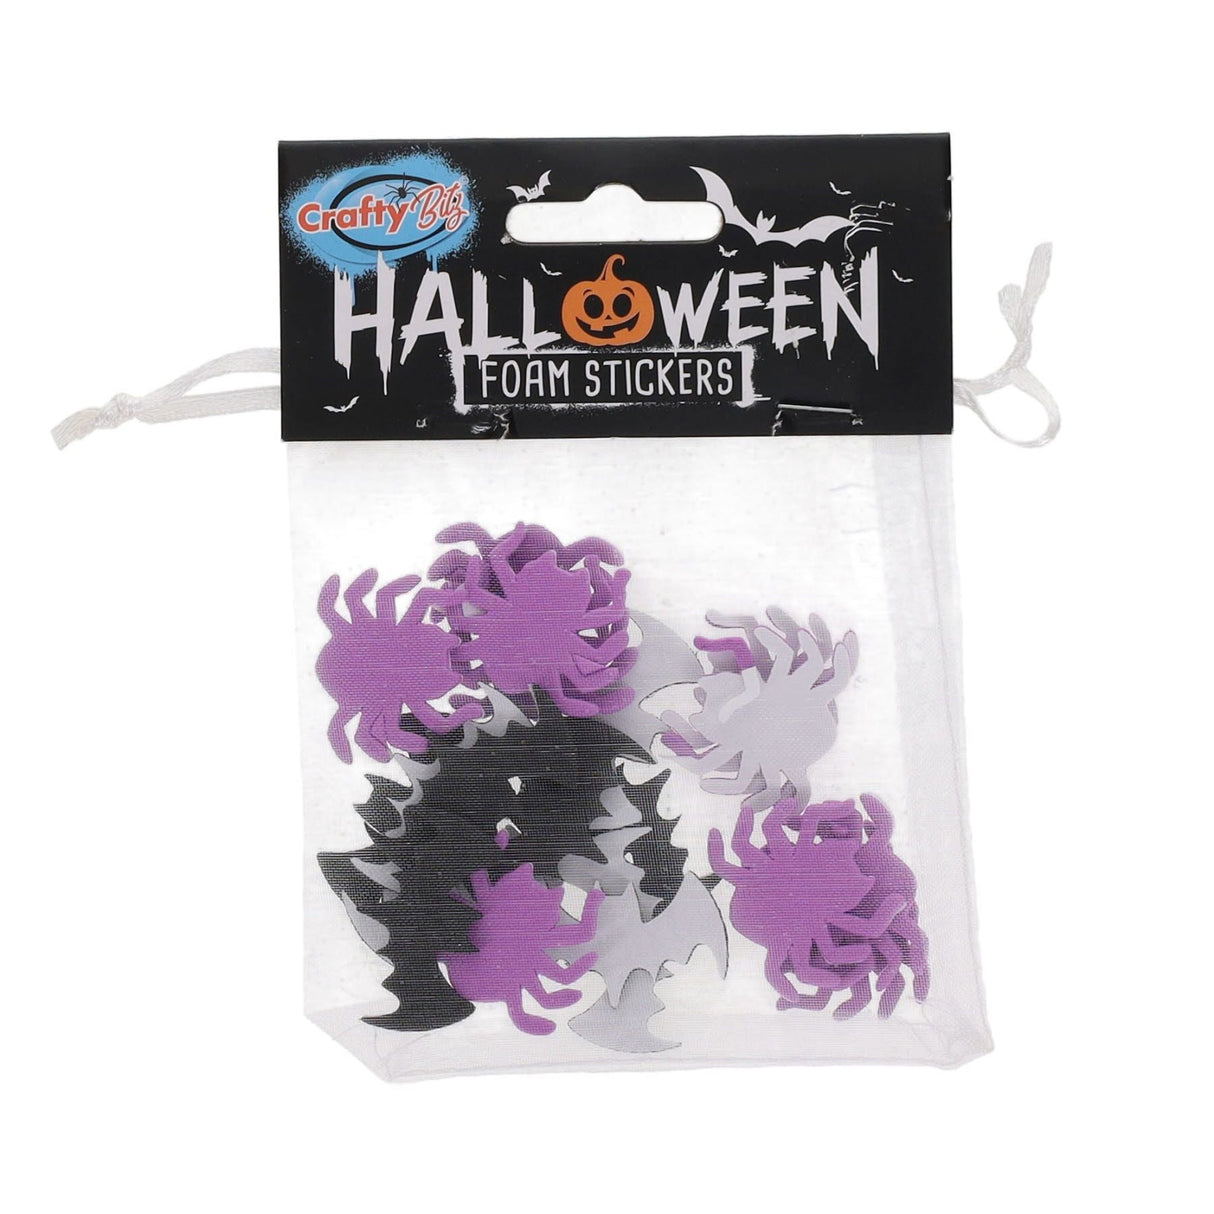 Crafty Bitz Halloween Foam Stickers - Pack of 20 | Stationery Shop UK